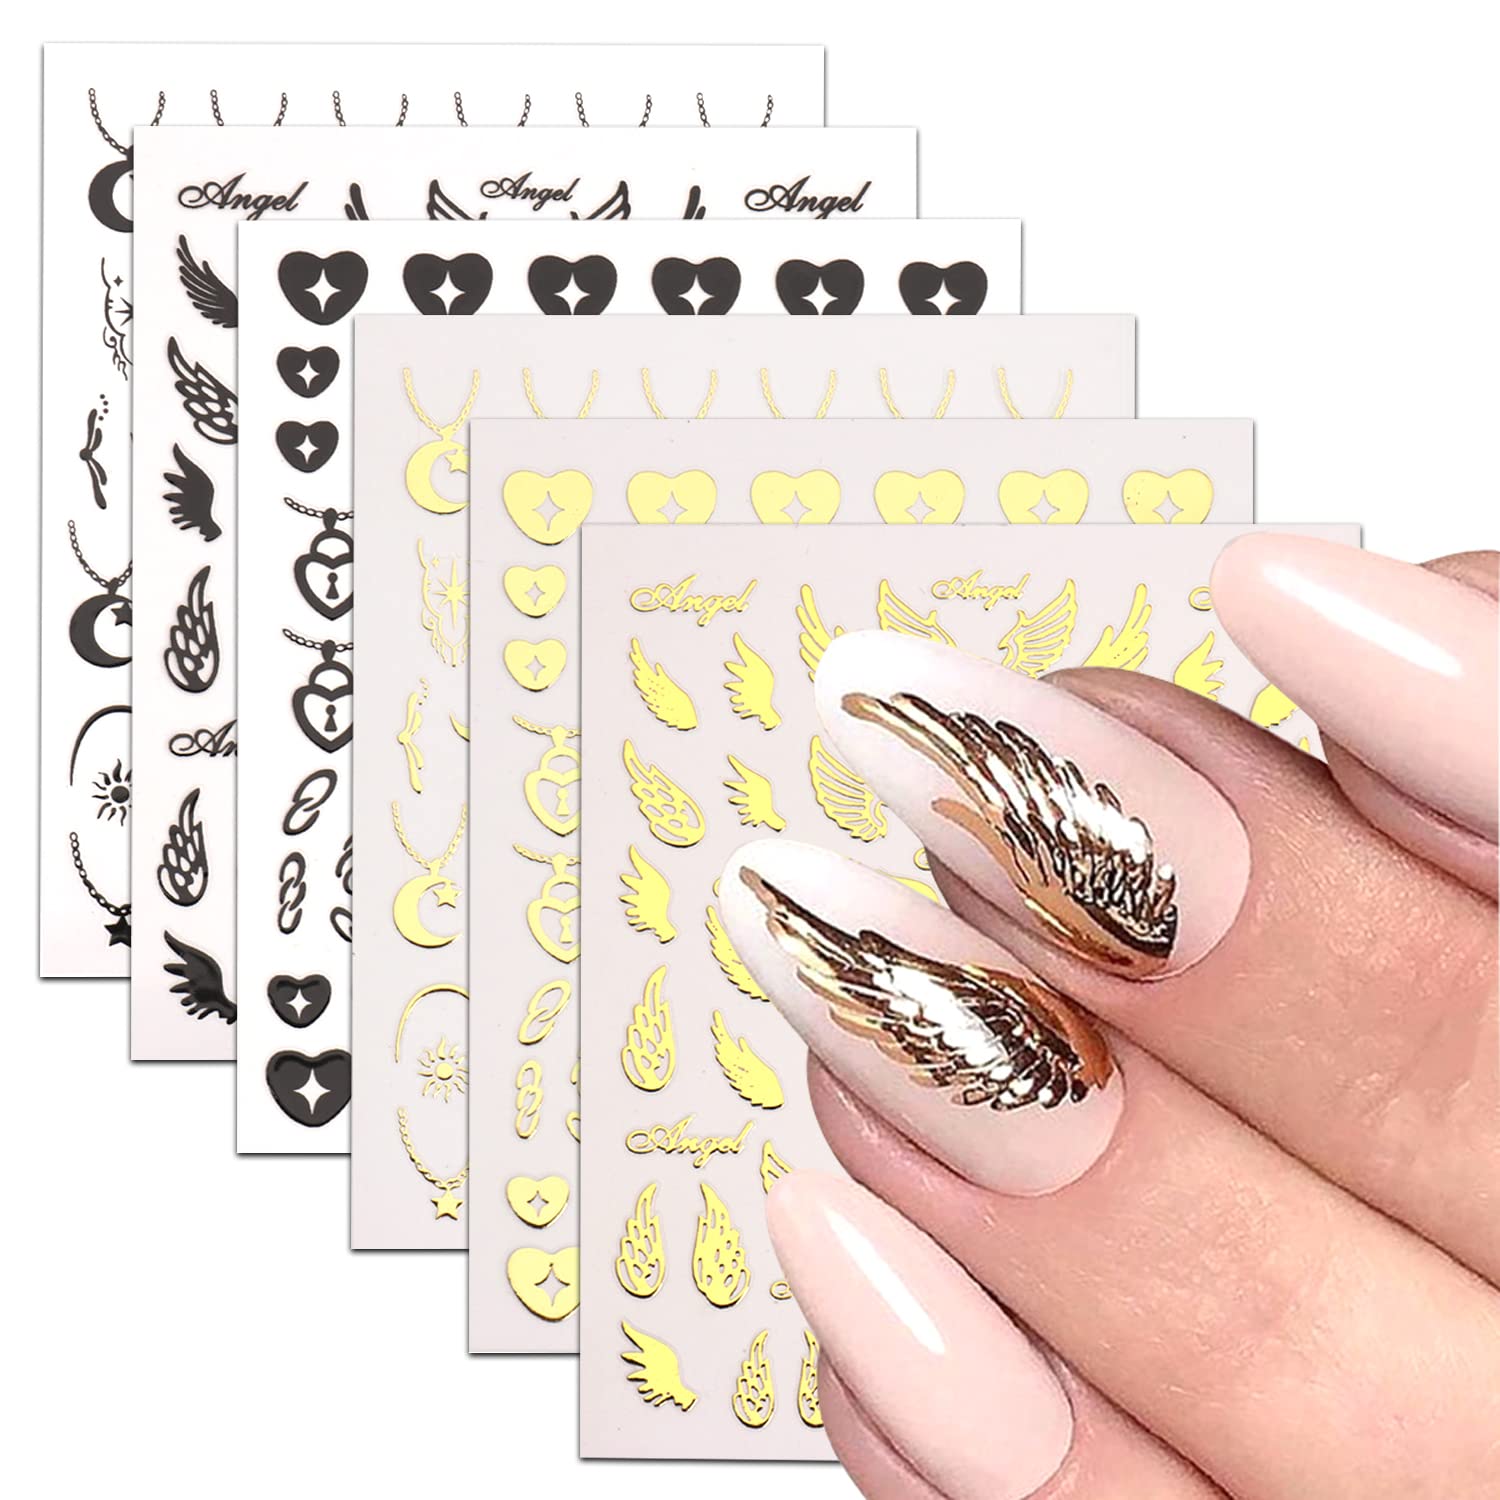 Angel Nail Art Sticker Water Transfer Fingernail Decoration Manicure  Accessories | eBay